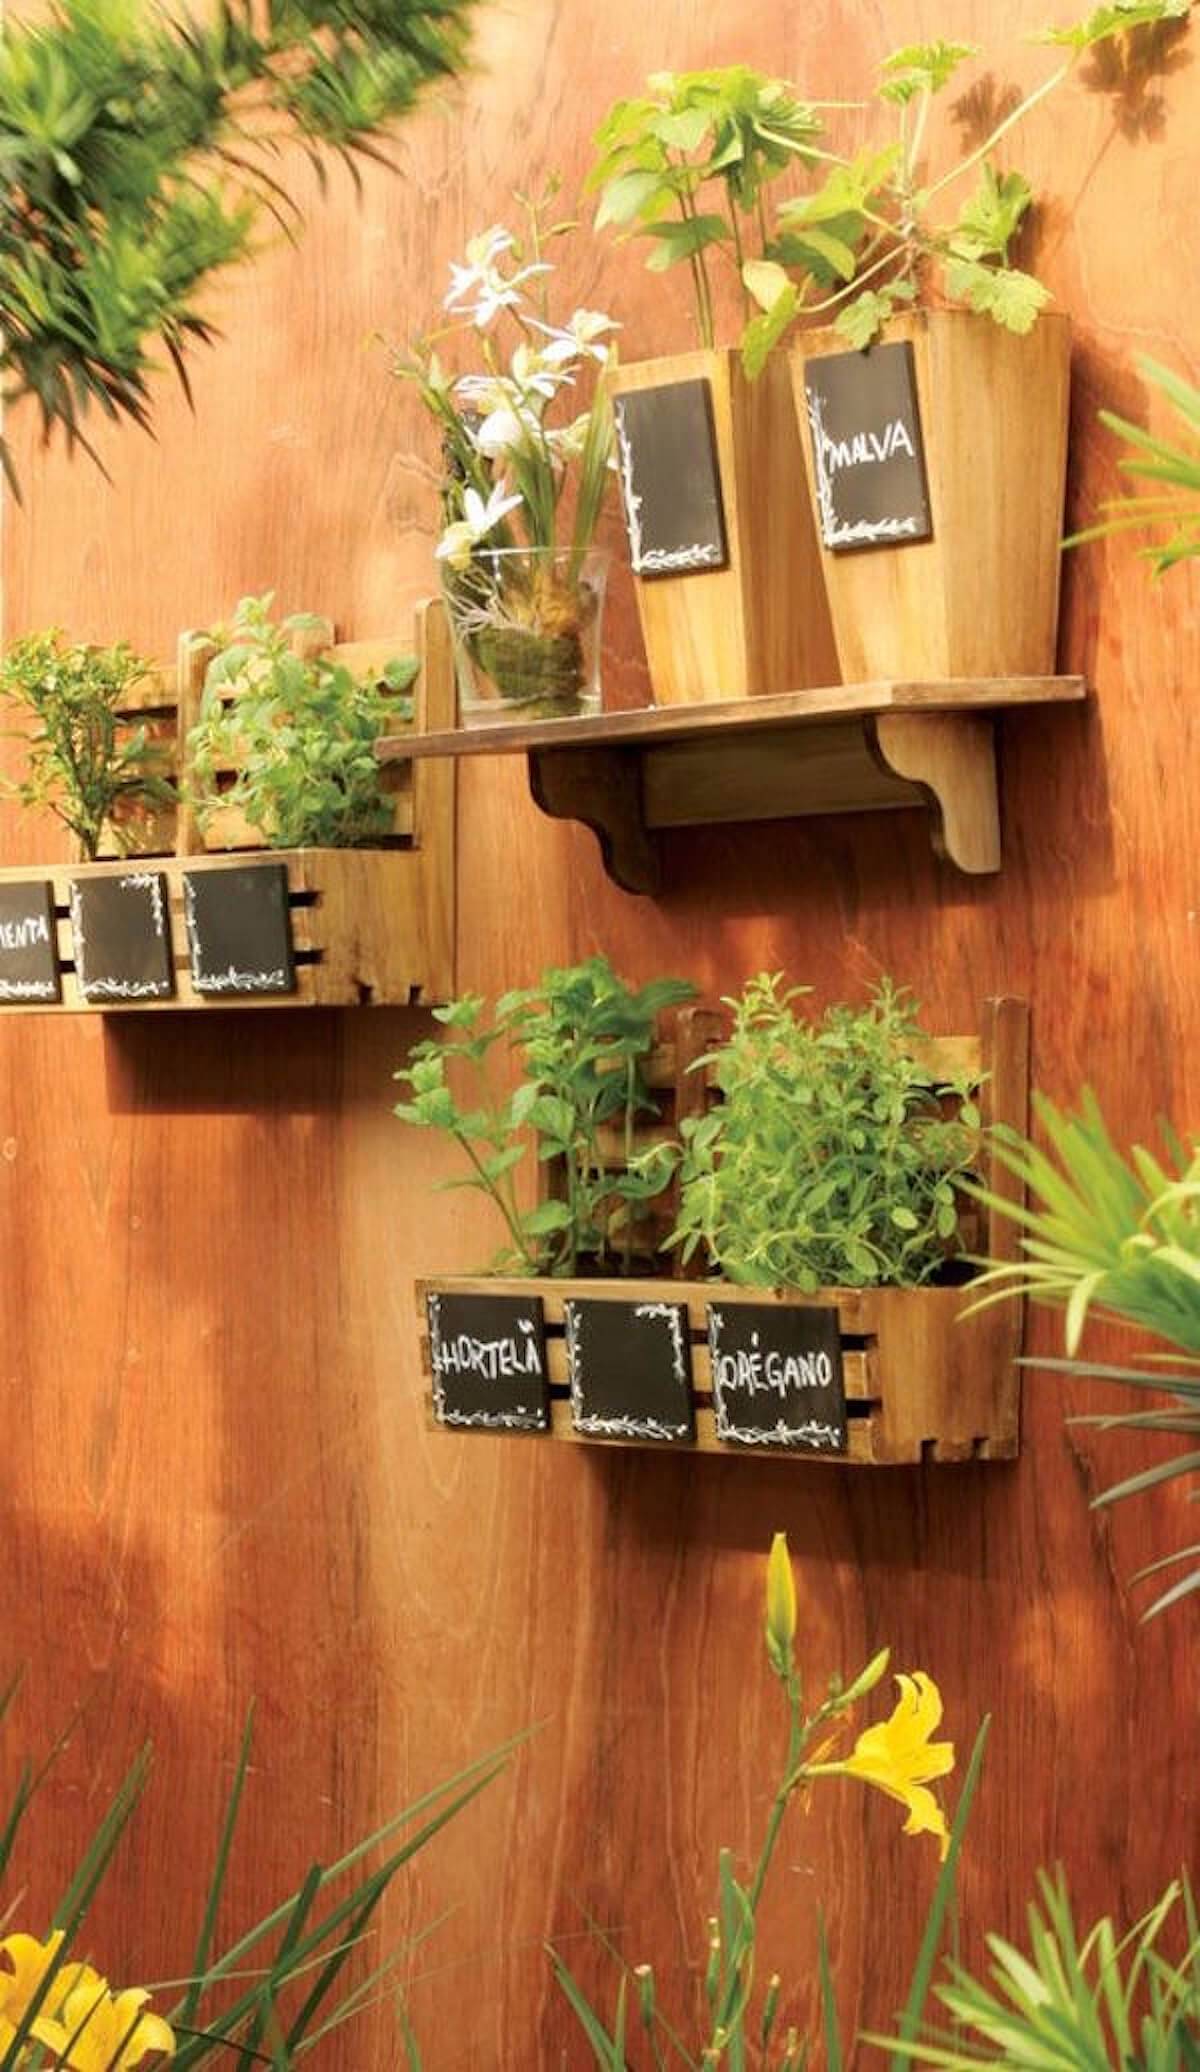 Amazing Ideas Small Herb Garden Ideas You Will Love Decorecent